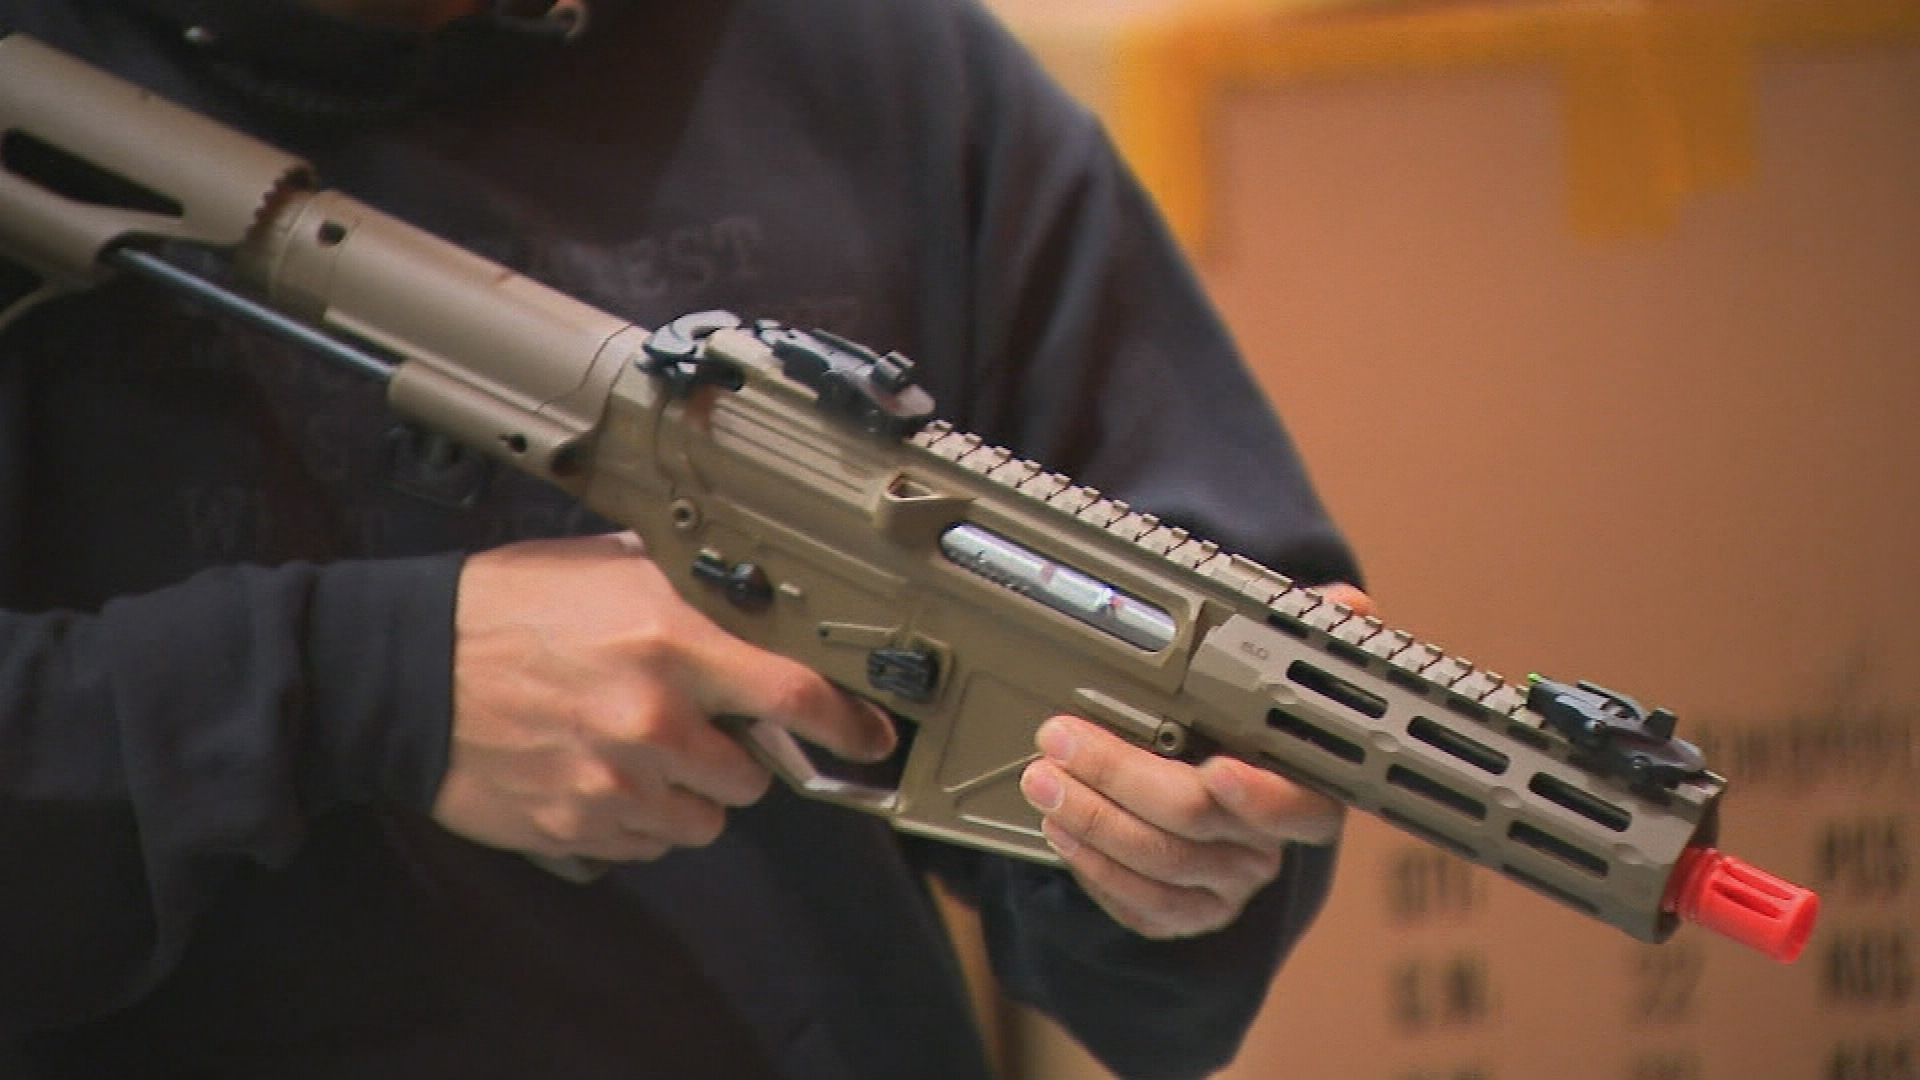 Gel blaster warning as pellets shot from toy gun 'risk serious